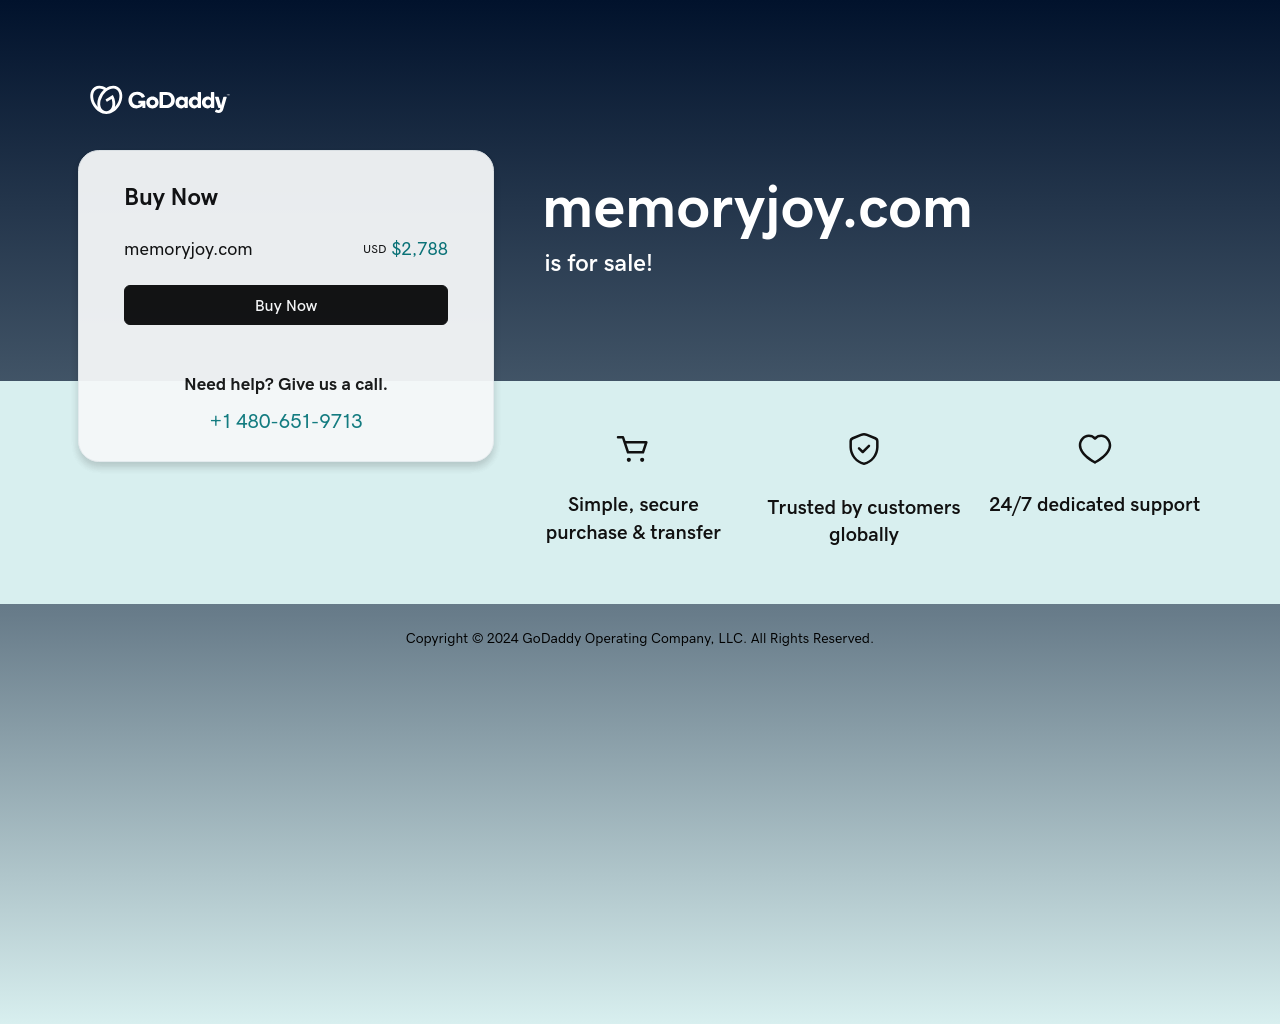 memoryjoy.com